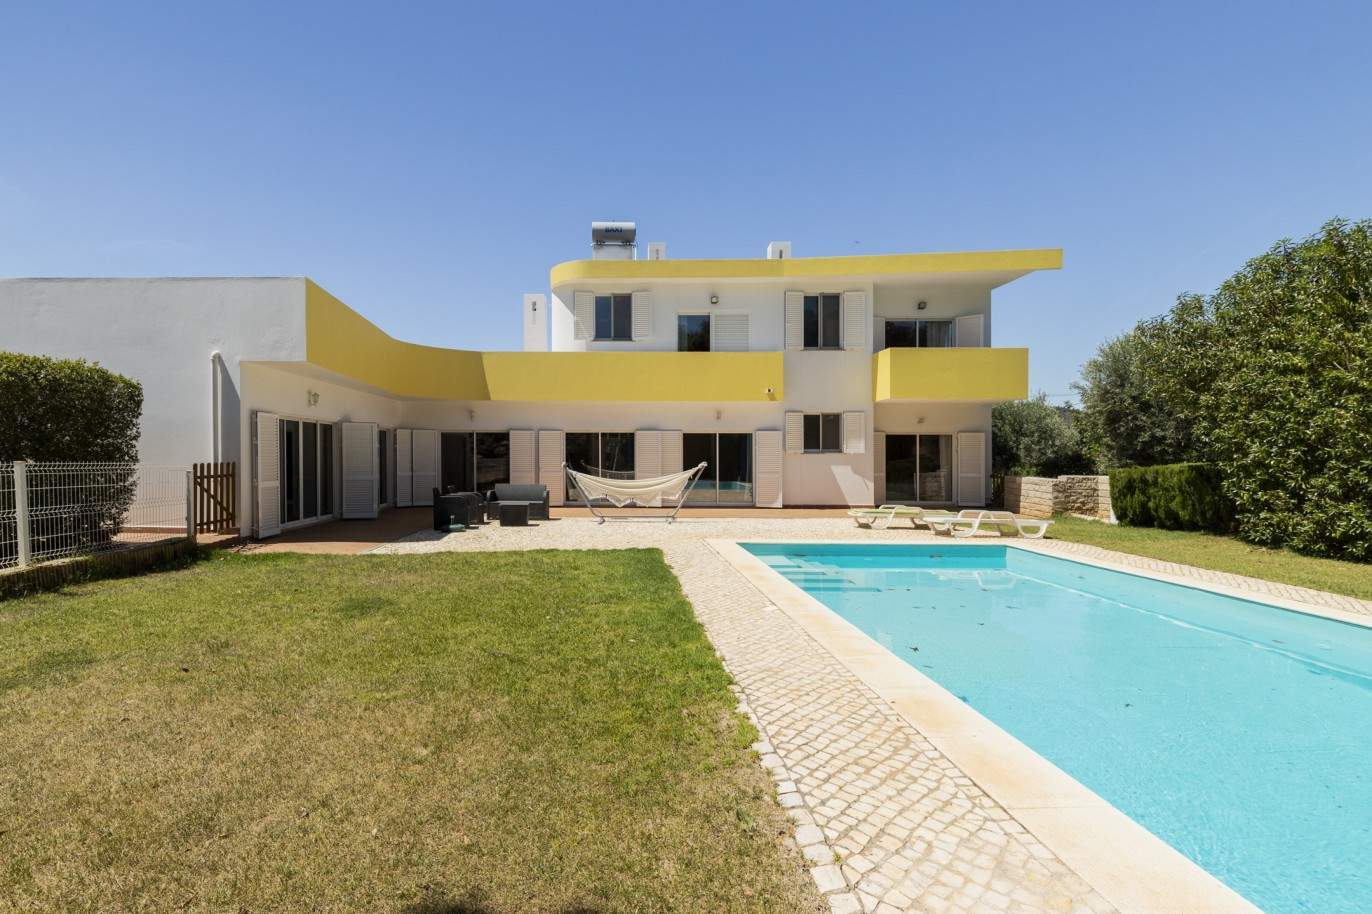 4 Bedroom Villa with pool, for sale in Loulé, Algarve_201302